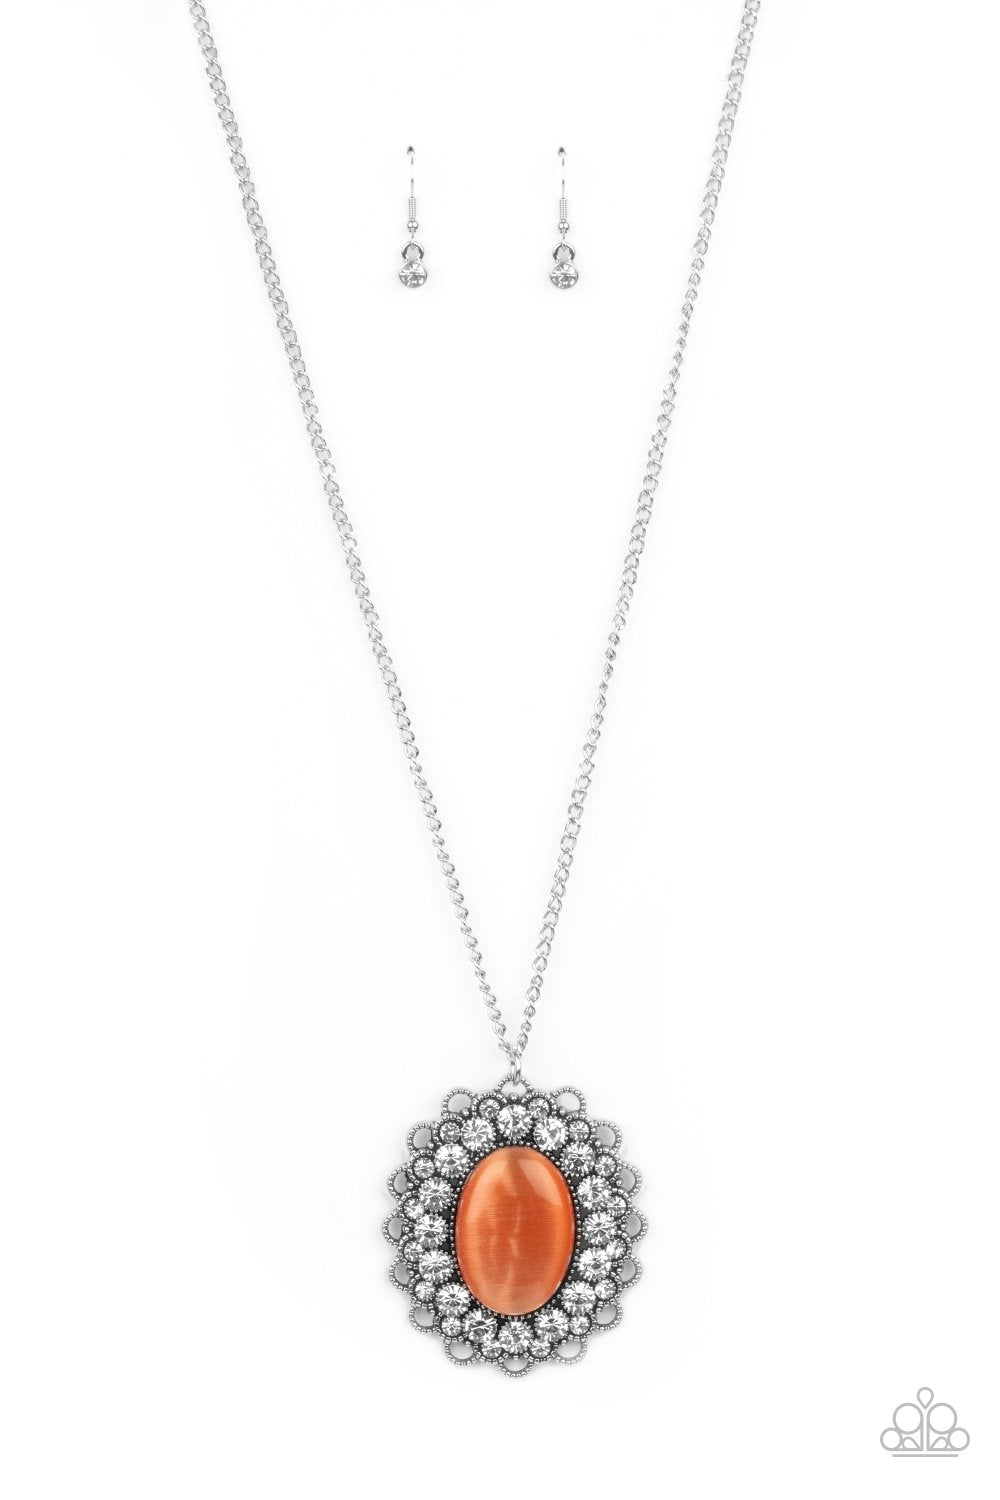 Oh My Medallion Orange Cat&#39;s Eye Stone Necklace - Paparazzi Accessories- lightbox - CarasShop.com - $5 Jewelry by Cara Jewels